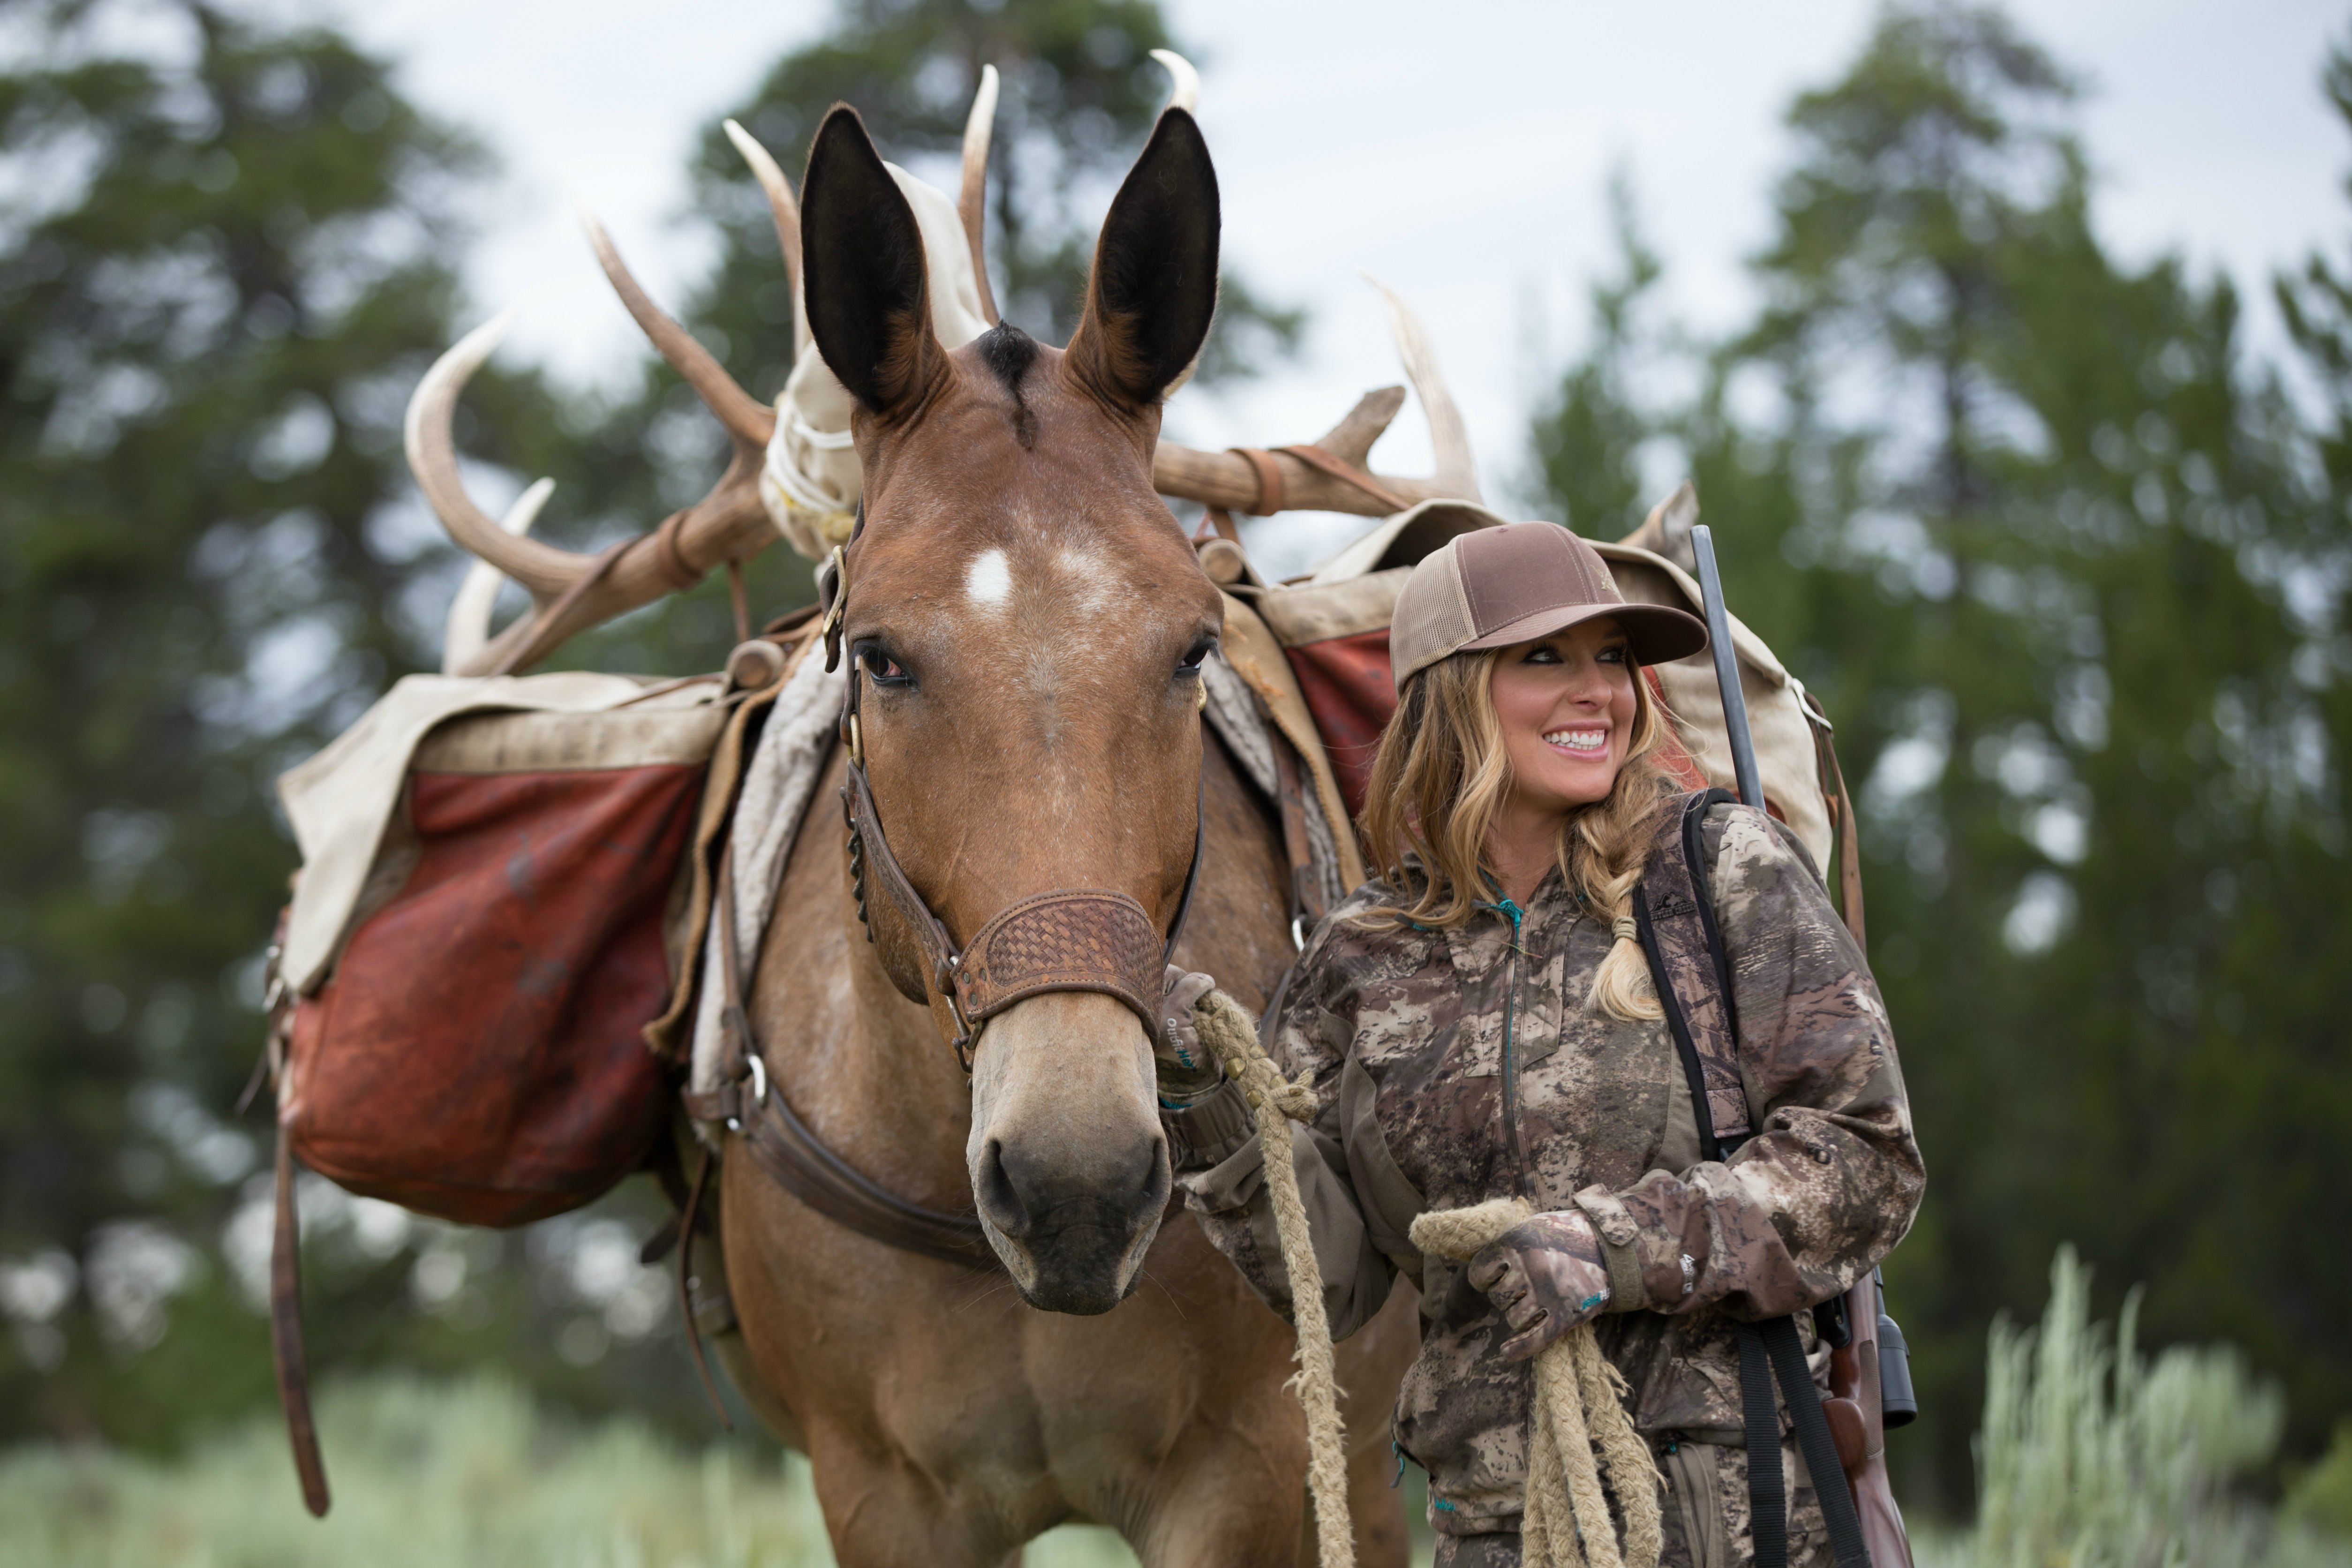 Kristy Titus is one of three diehard hunters featured in CarbonTV’s “Women ...